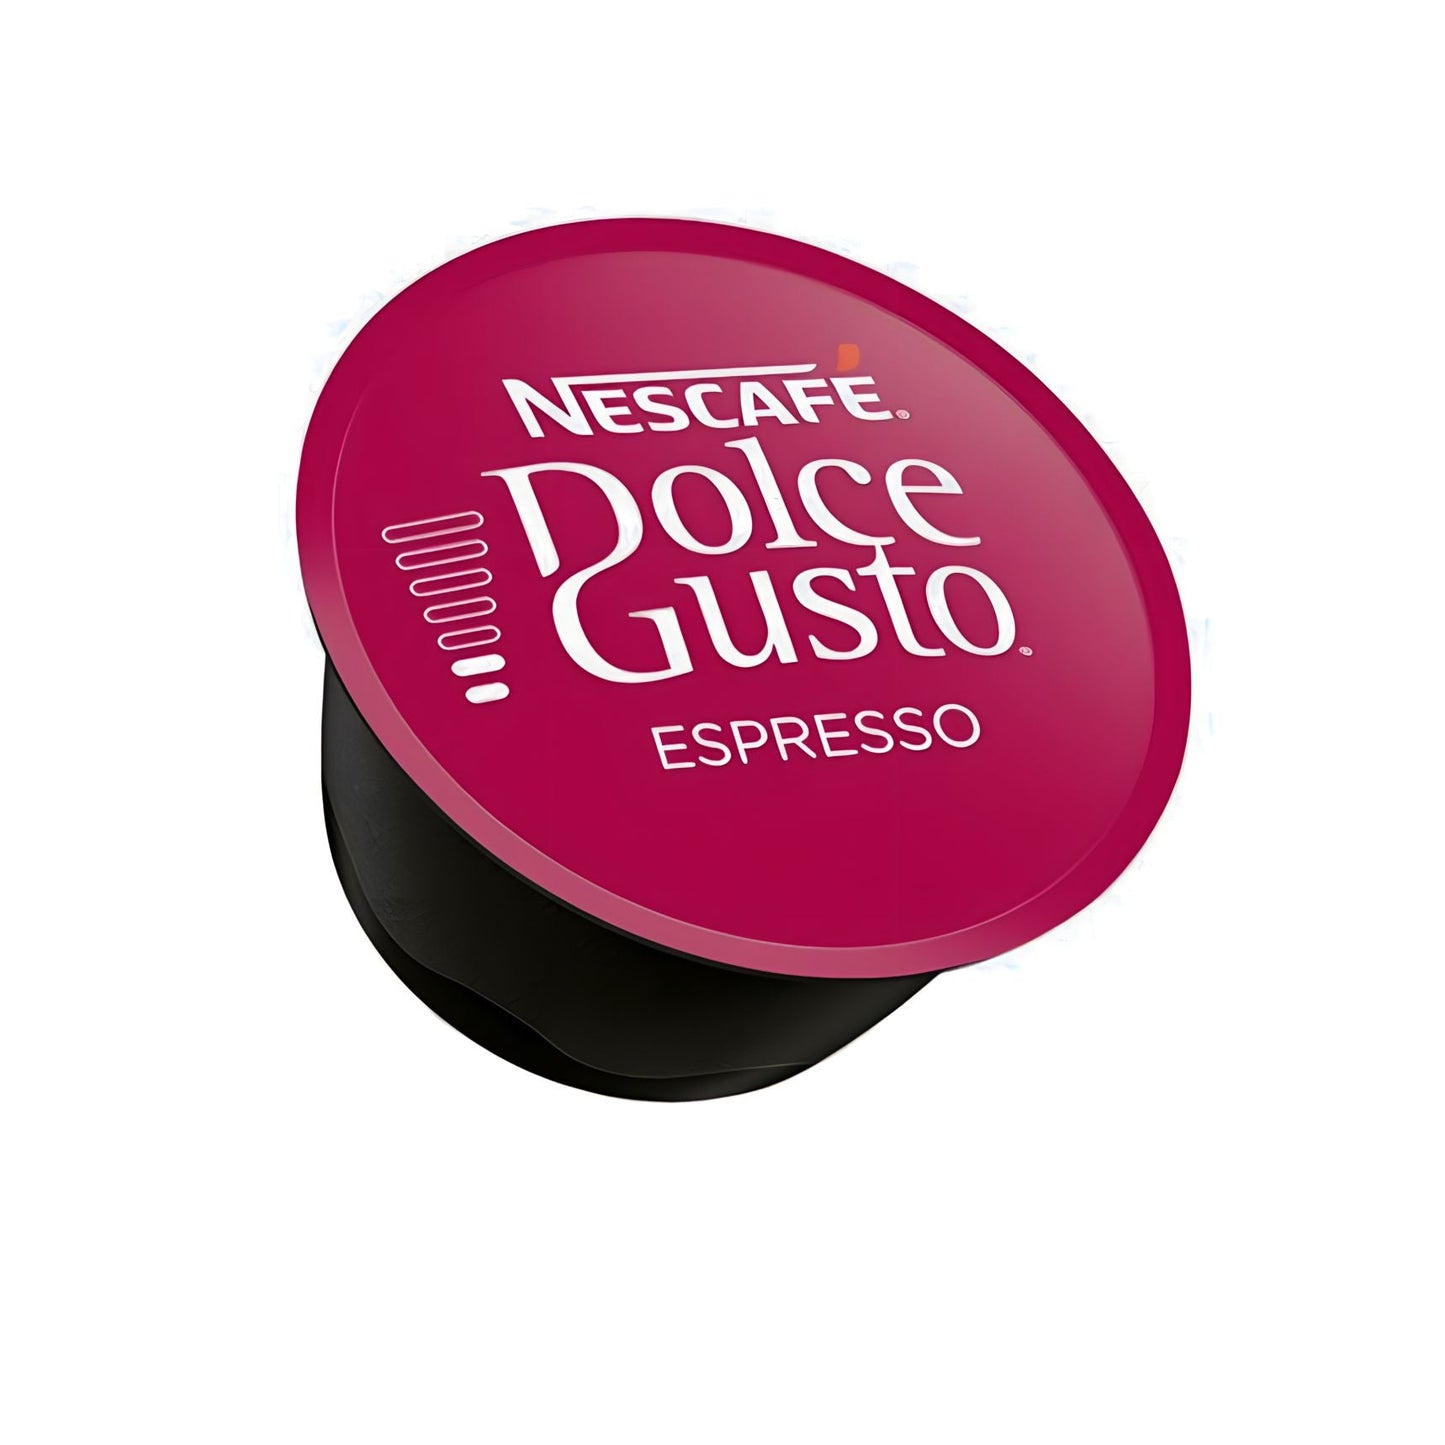 Espresso - Nescafe Dolce Gusto kapsuleBIM SHOP Espresso - Nescafe Dolce Gusto kapsule - BIM SHOP